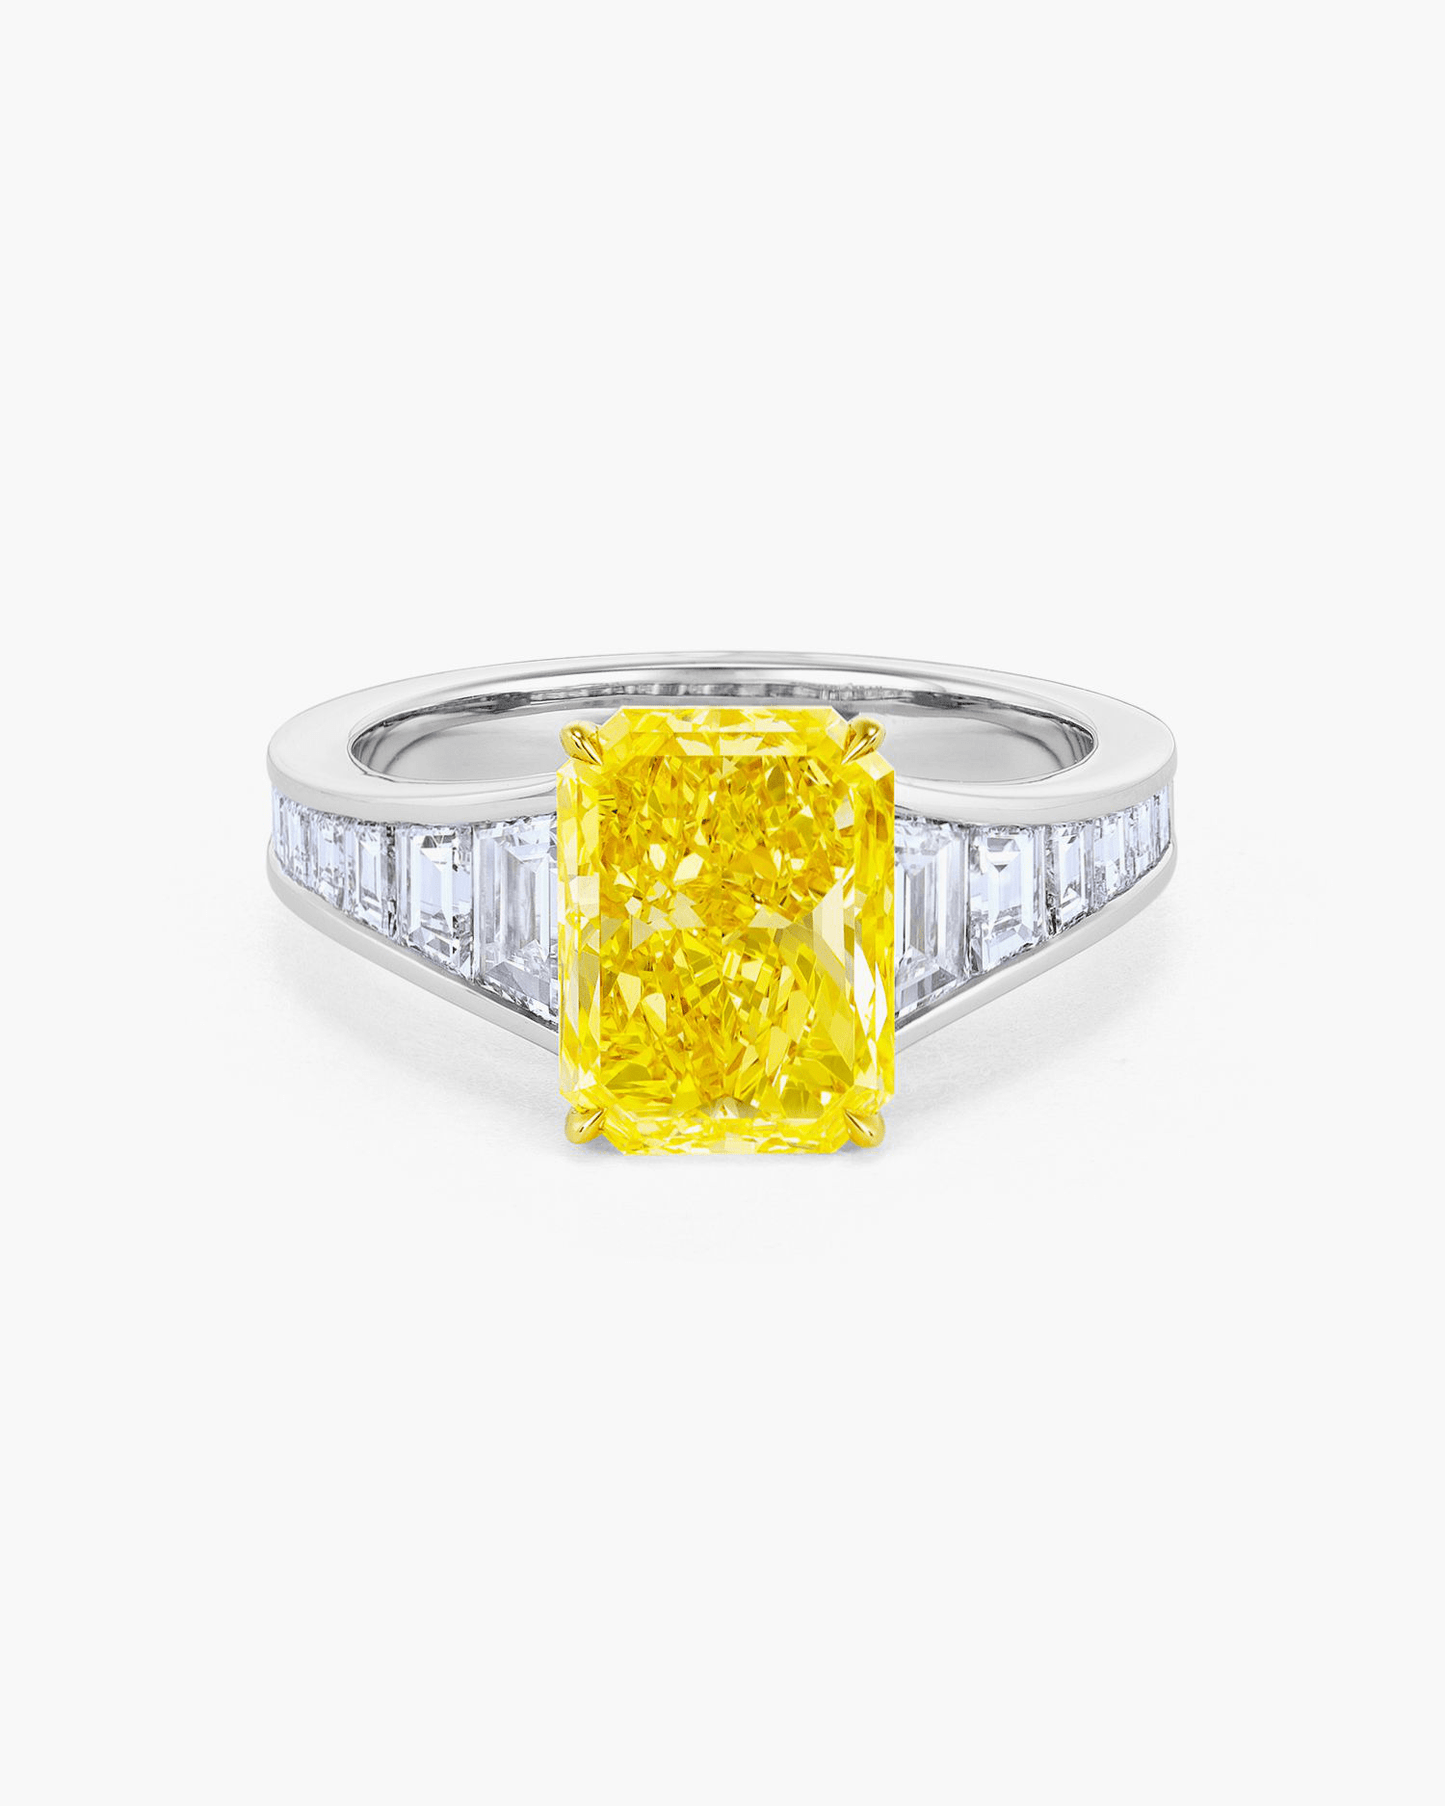 2.54 carat Radiant Cut Yellow and White Diamond Ring